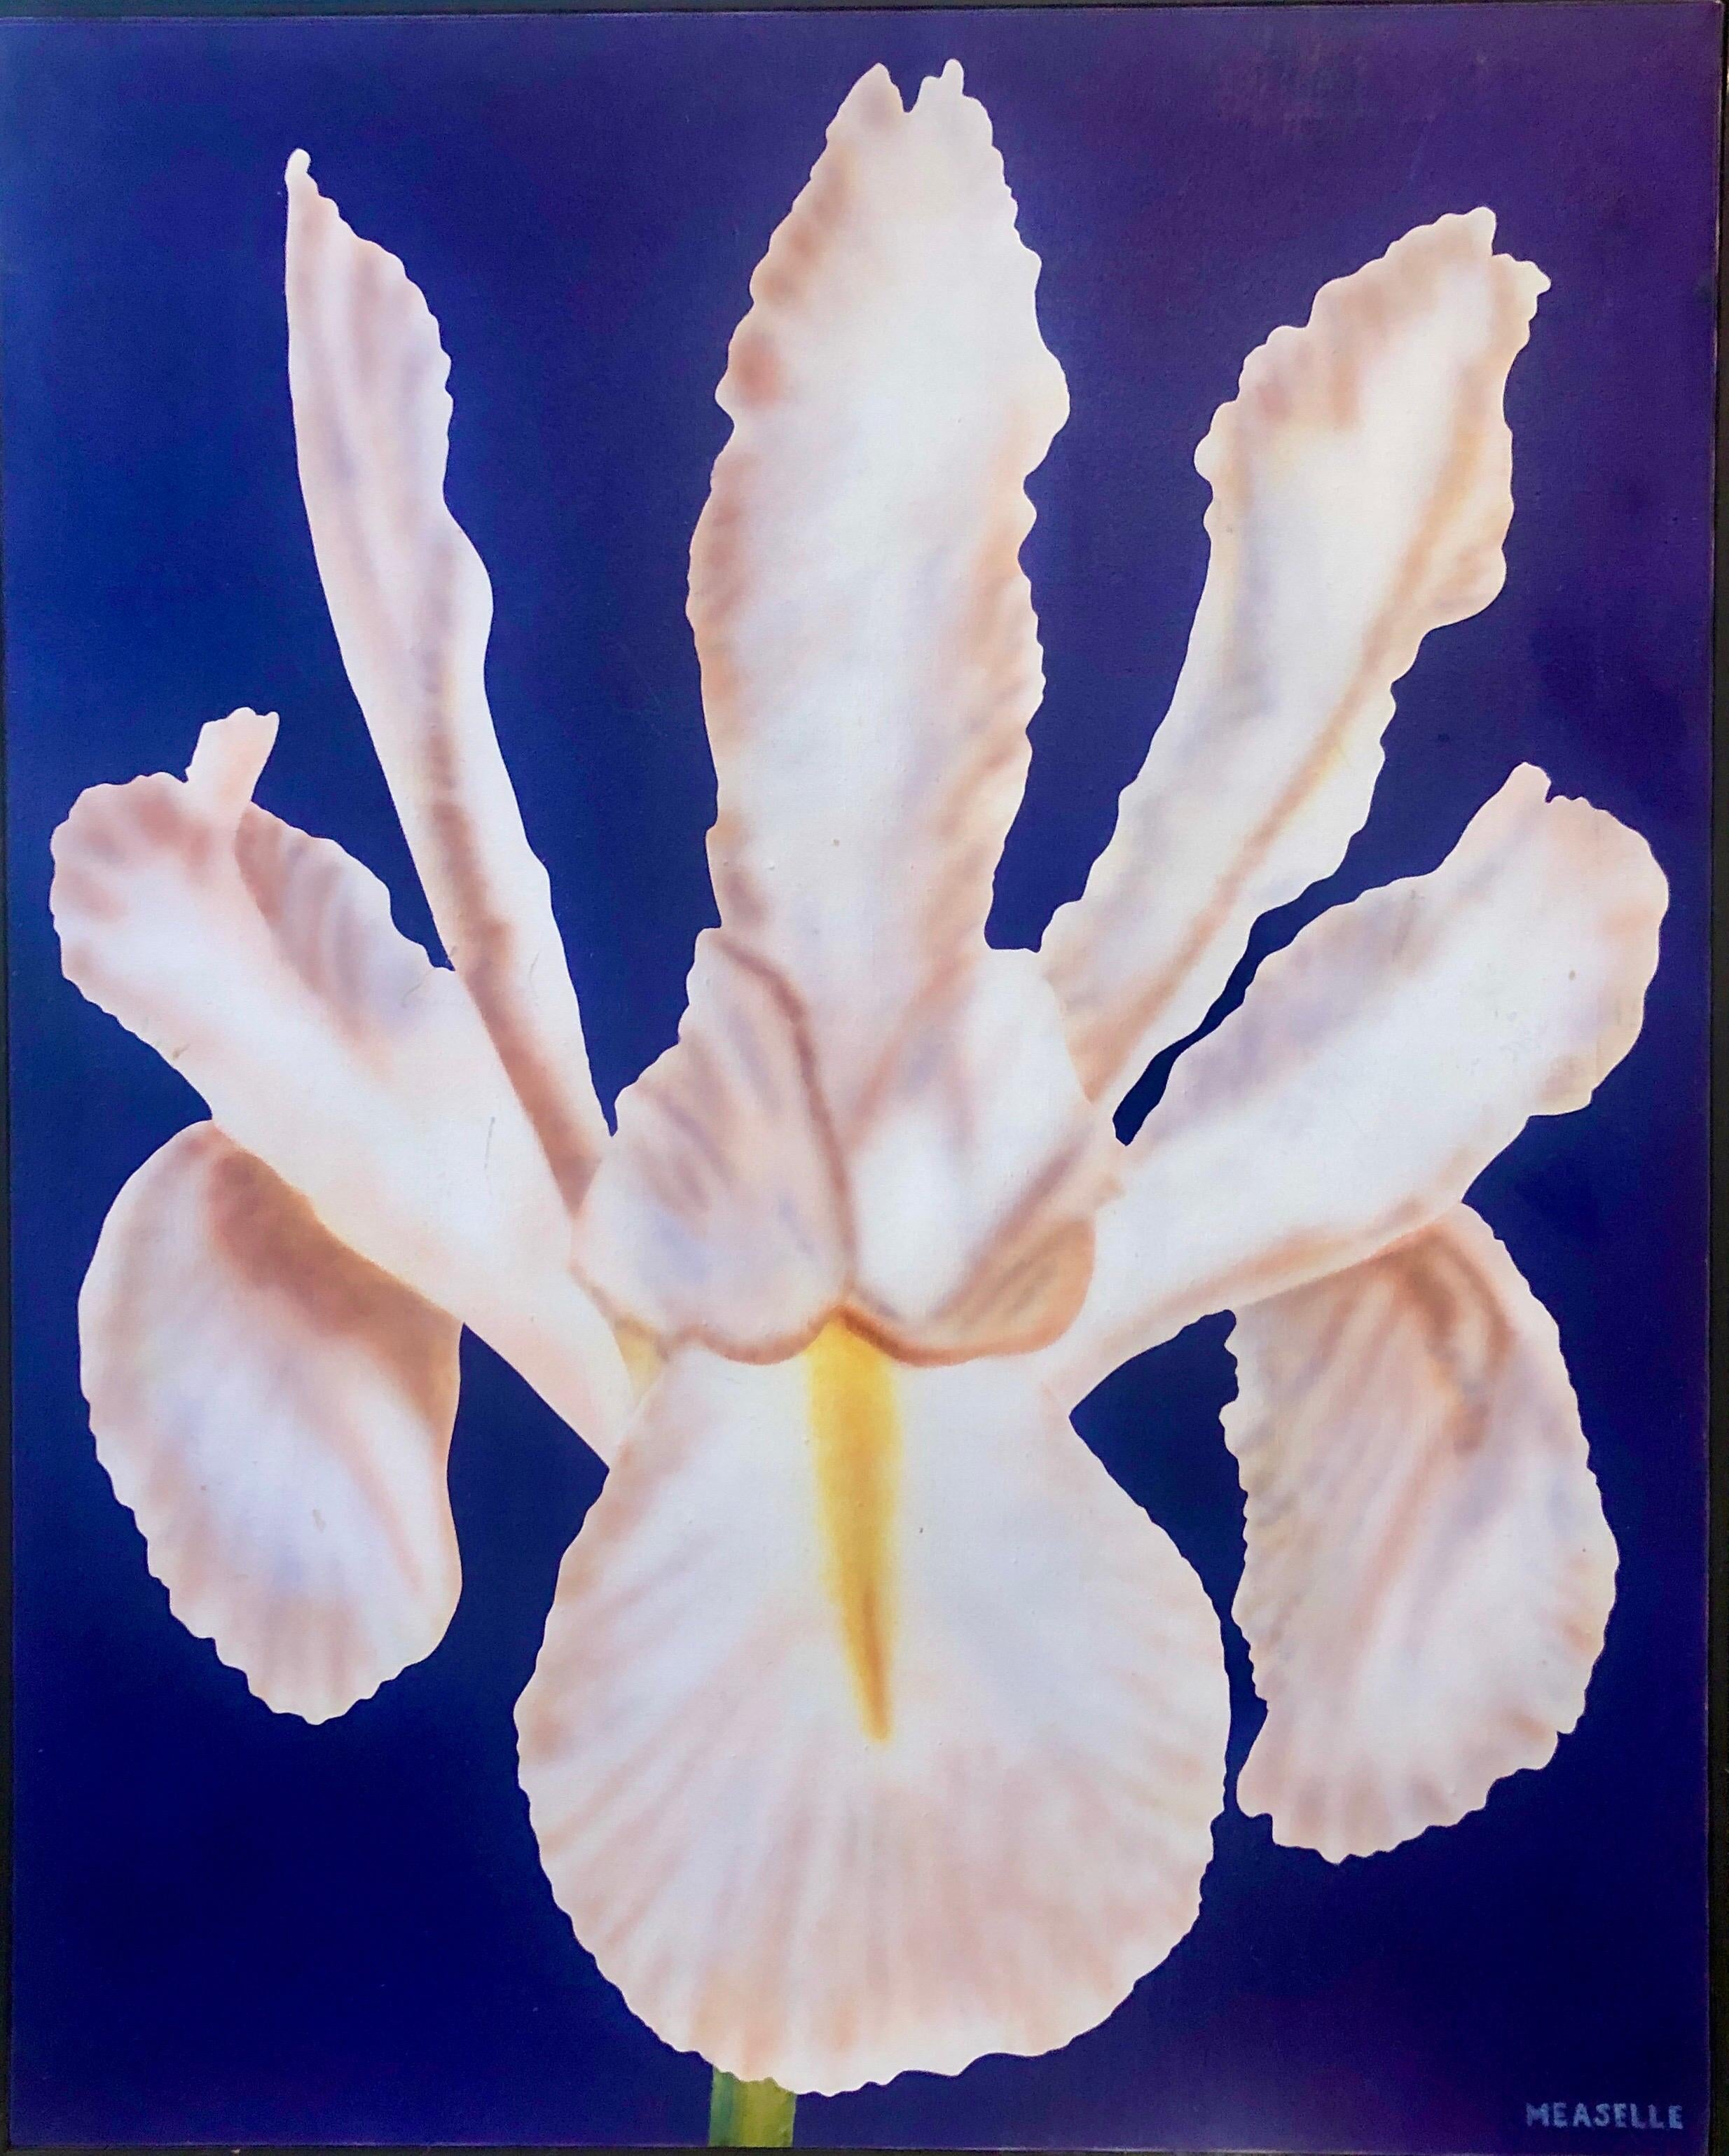 Clarence Measelle Figurative Painting – Fotorealismus Stillleben Acrylmalerei Blume Foto Realistische Orchidee, lebhaftes Blau